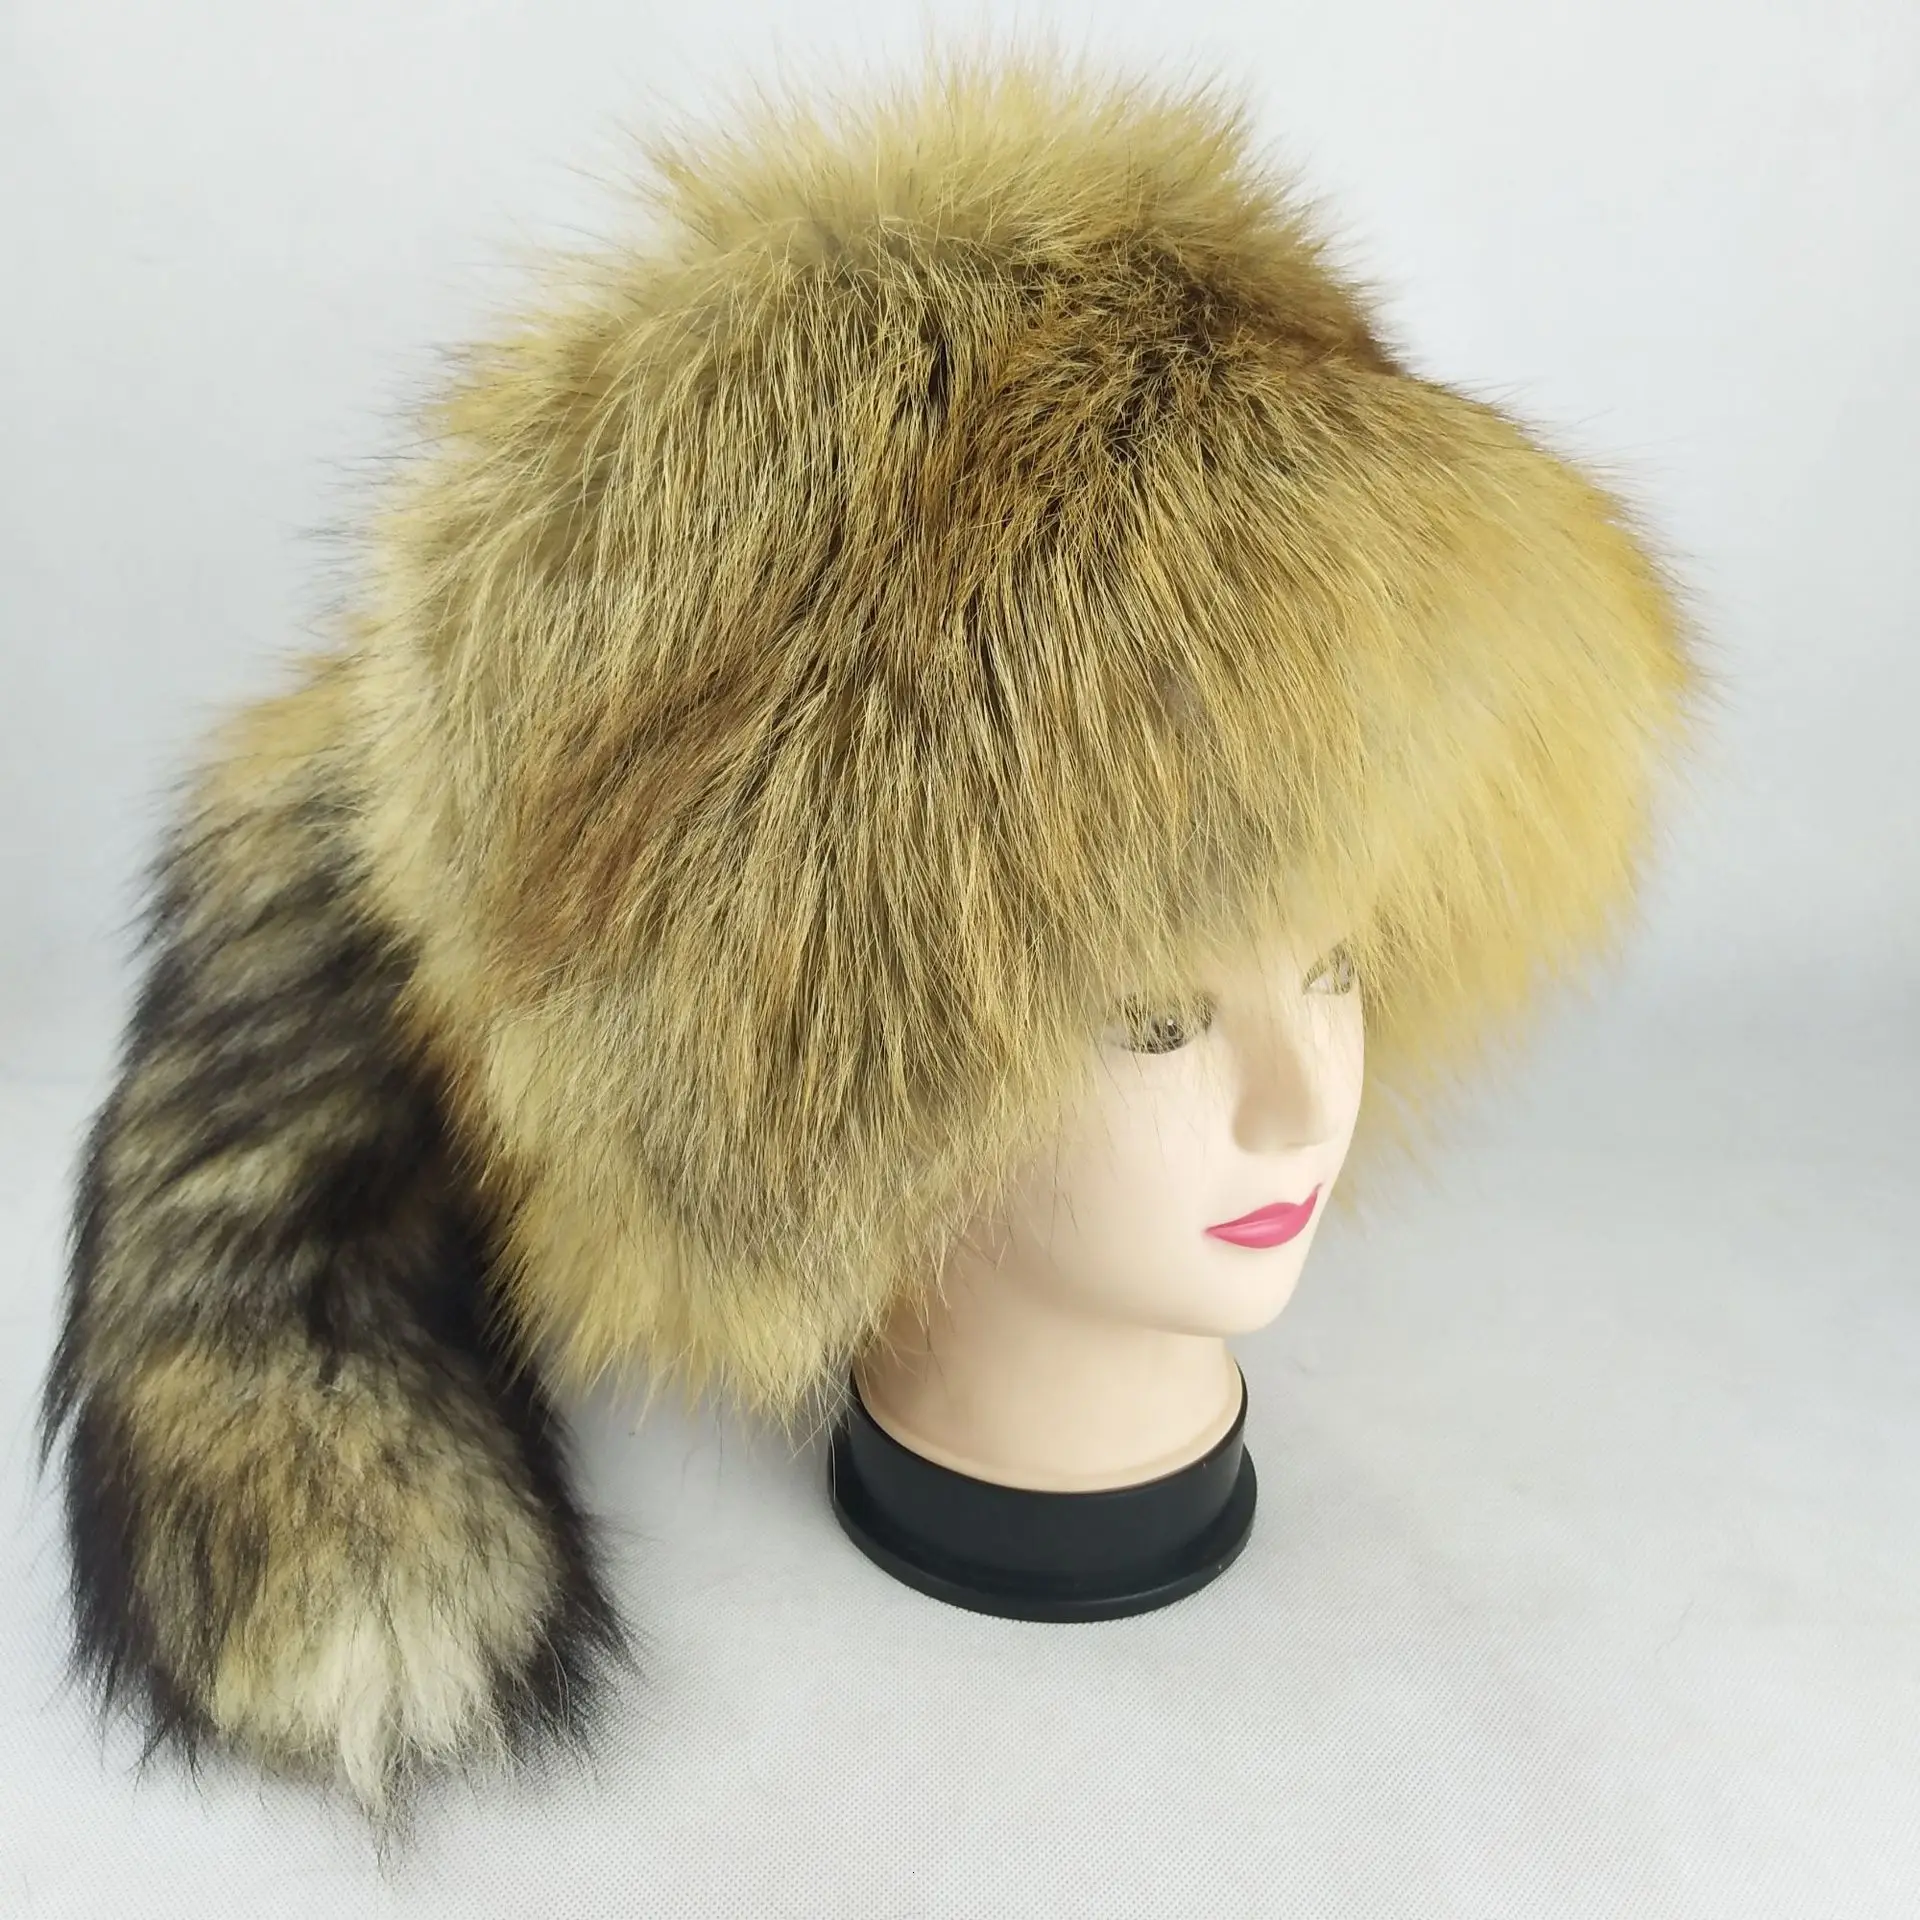 Зимняя женская шапка Lei Feng, кожа, мех лисы, хвост, уши, шапка для женщин, натуральный Лисий мех, шапка для женщин, зимняя шапка, теплая шерстяная шапка